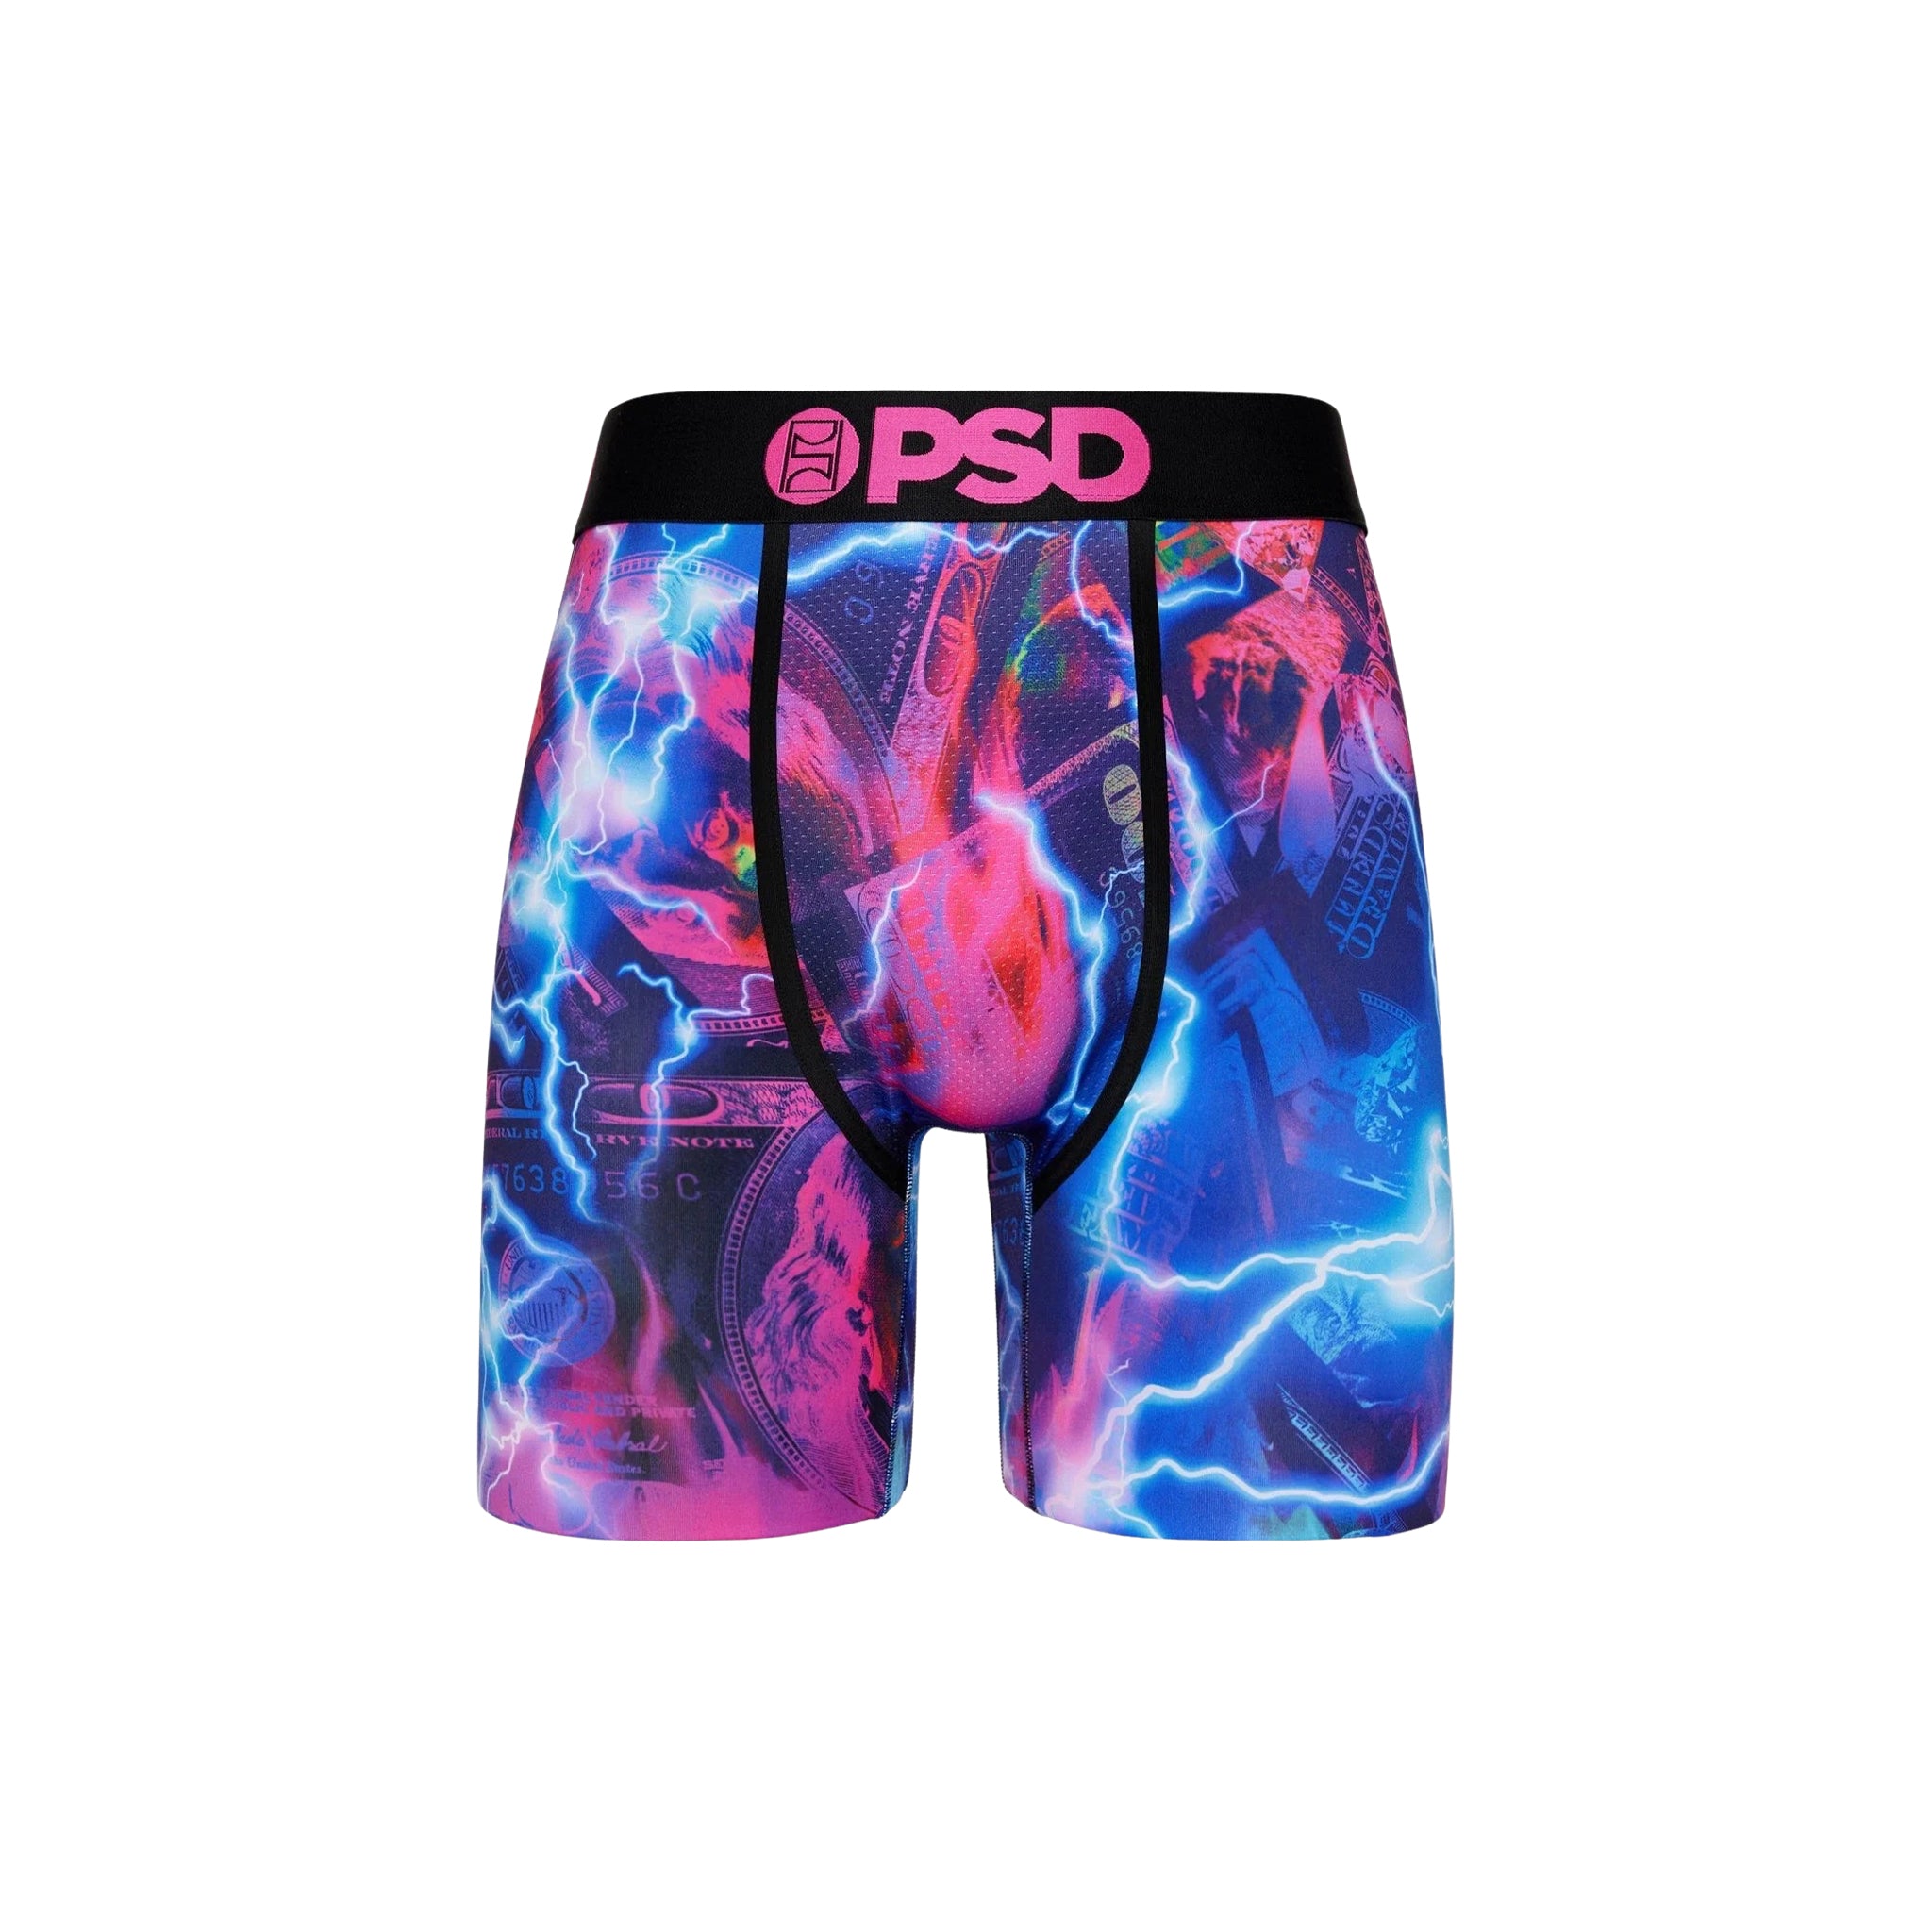 PSD "Money Bolts" Underwear